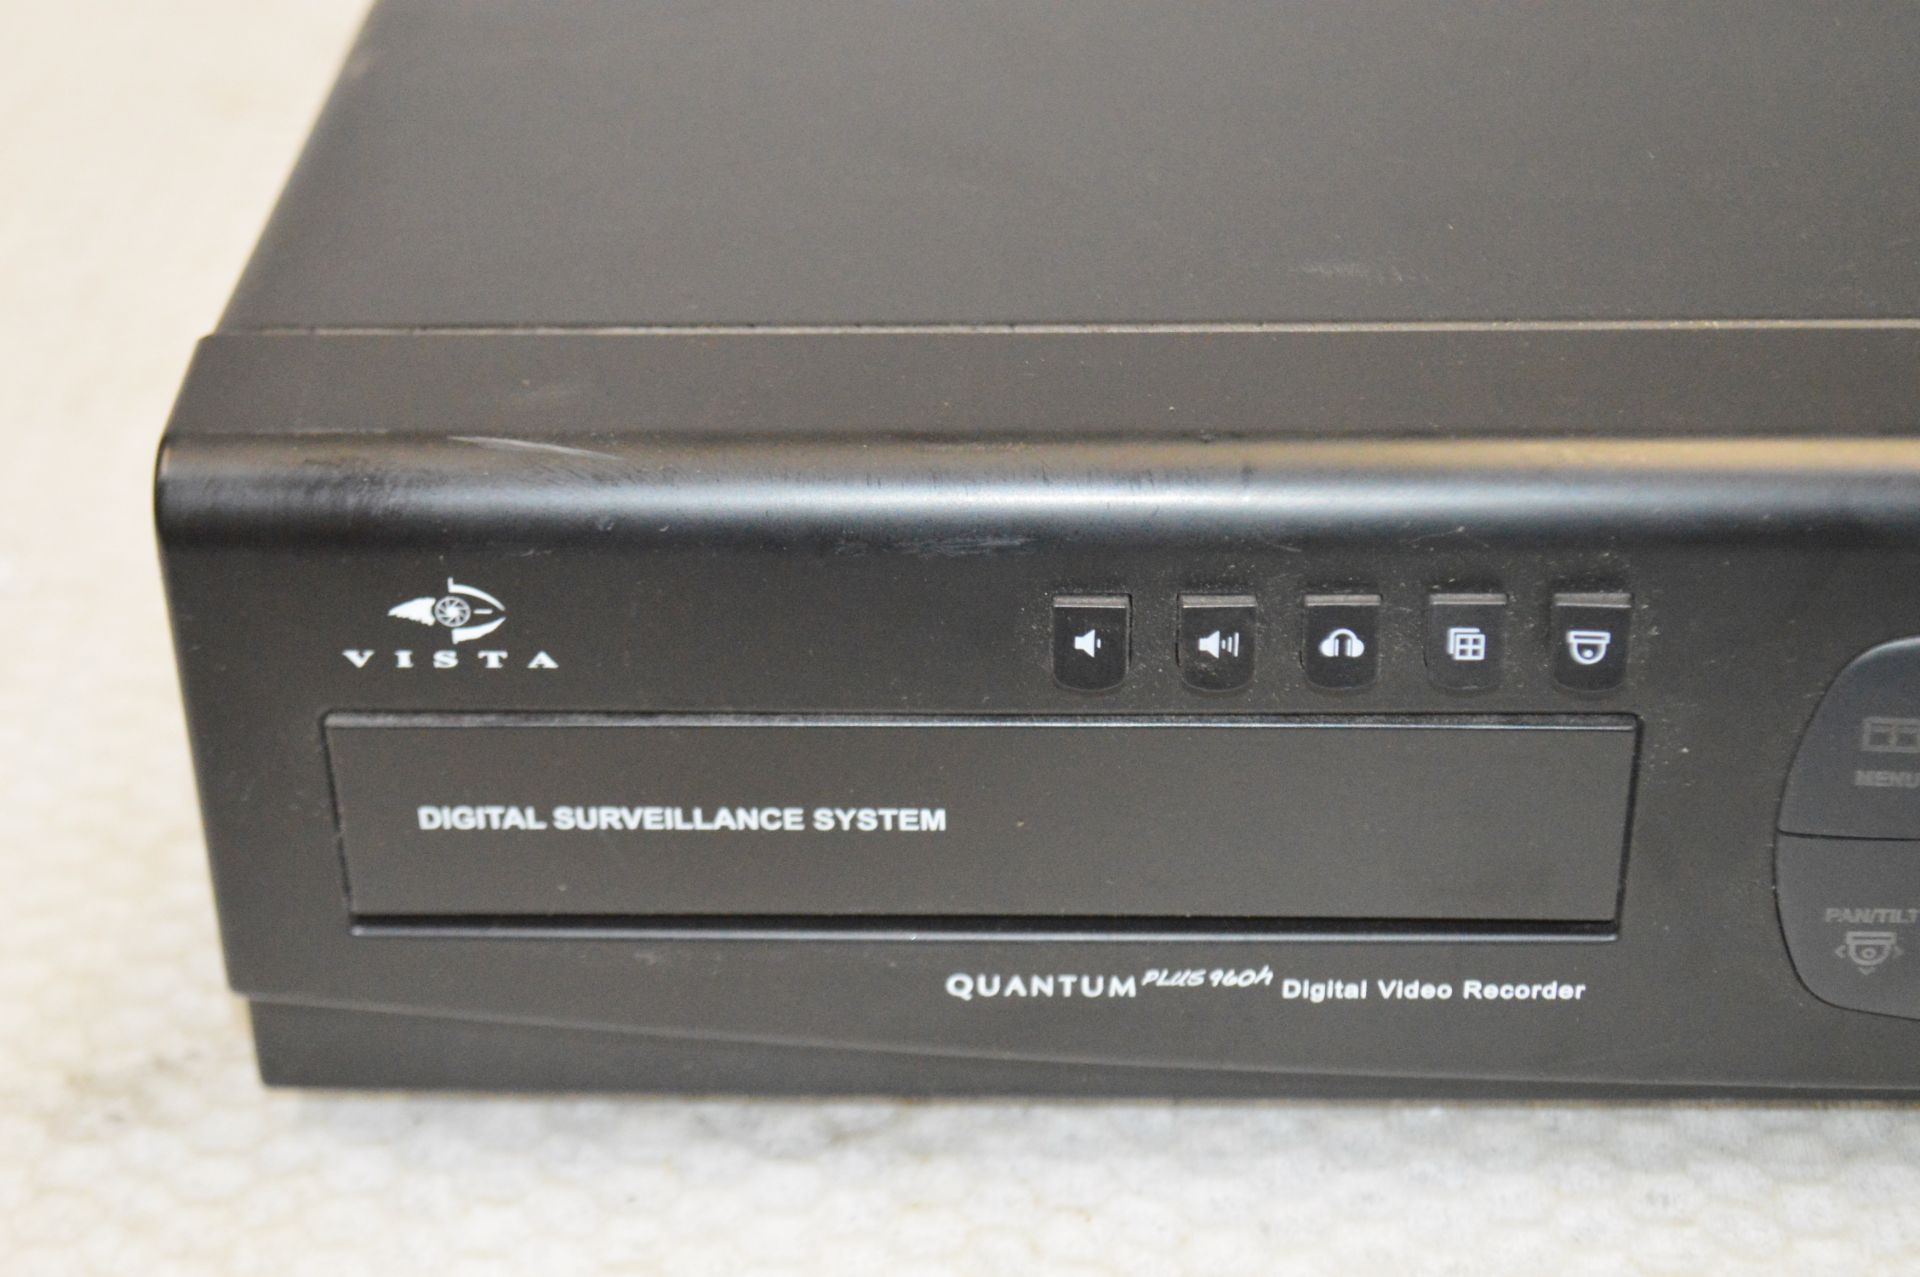 1 x Vista Quantum Plus 16 Channel 2TB Home or Business CCTV Security Camera Digital DVR Recorder - - Image 2 of 4